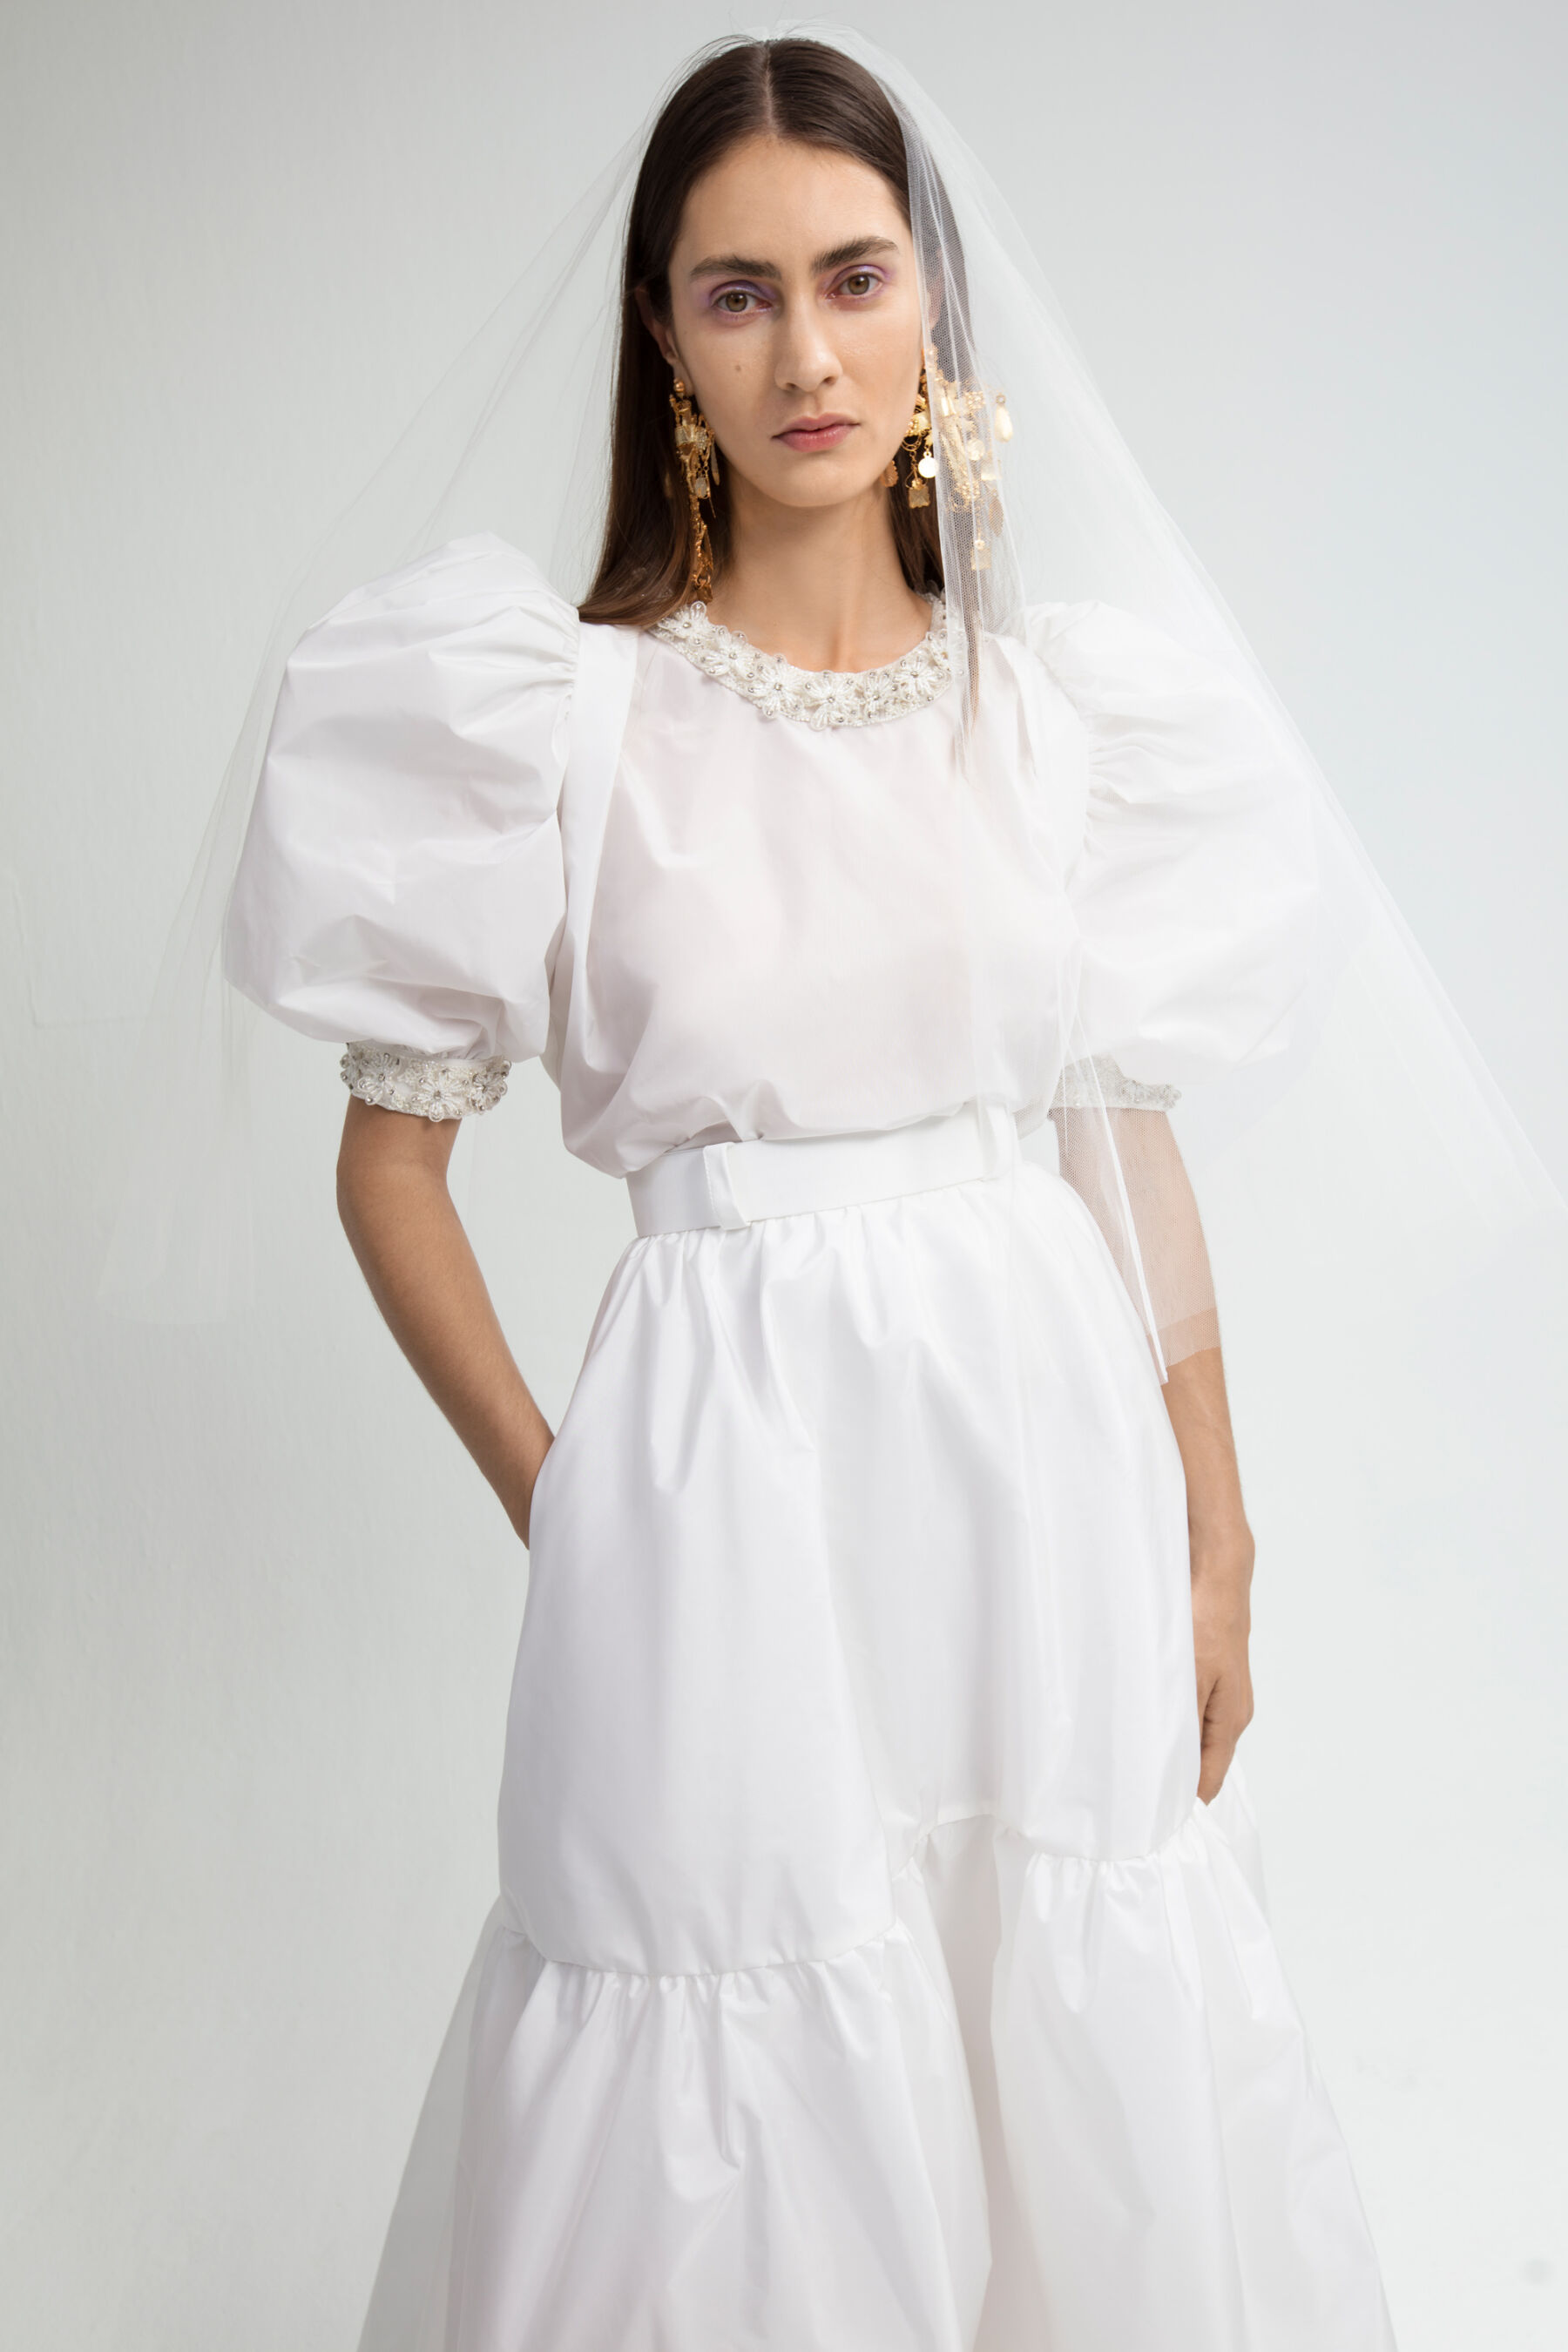 Yolan Cris modern wedding dress. Available at the Miss Bush pop up sample sale, April 2023.